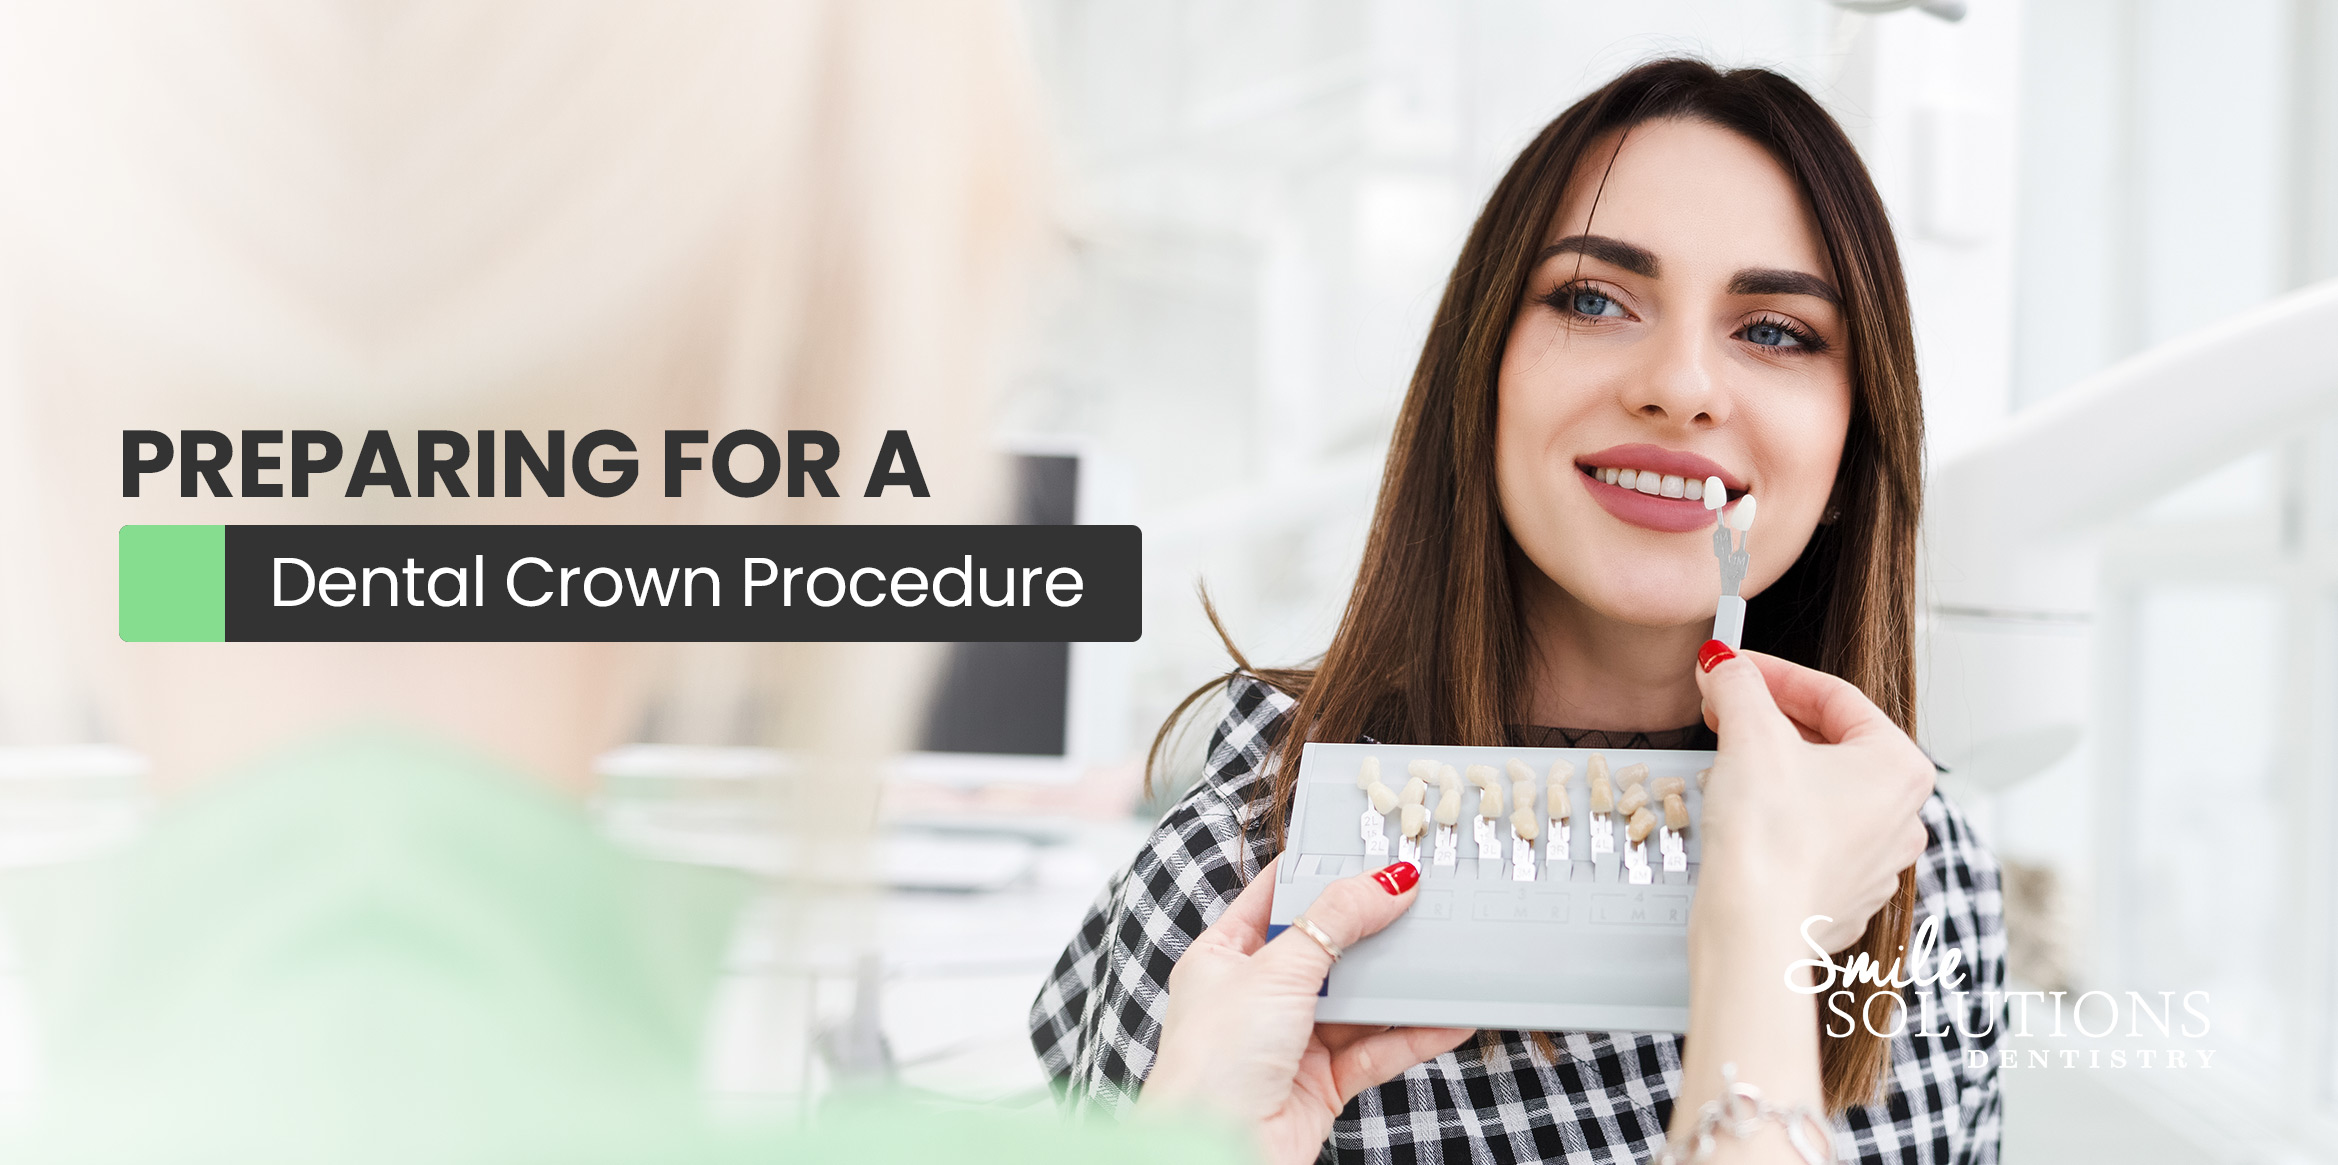 Preparing for a Dental Crown Procedure